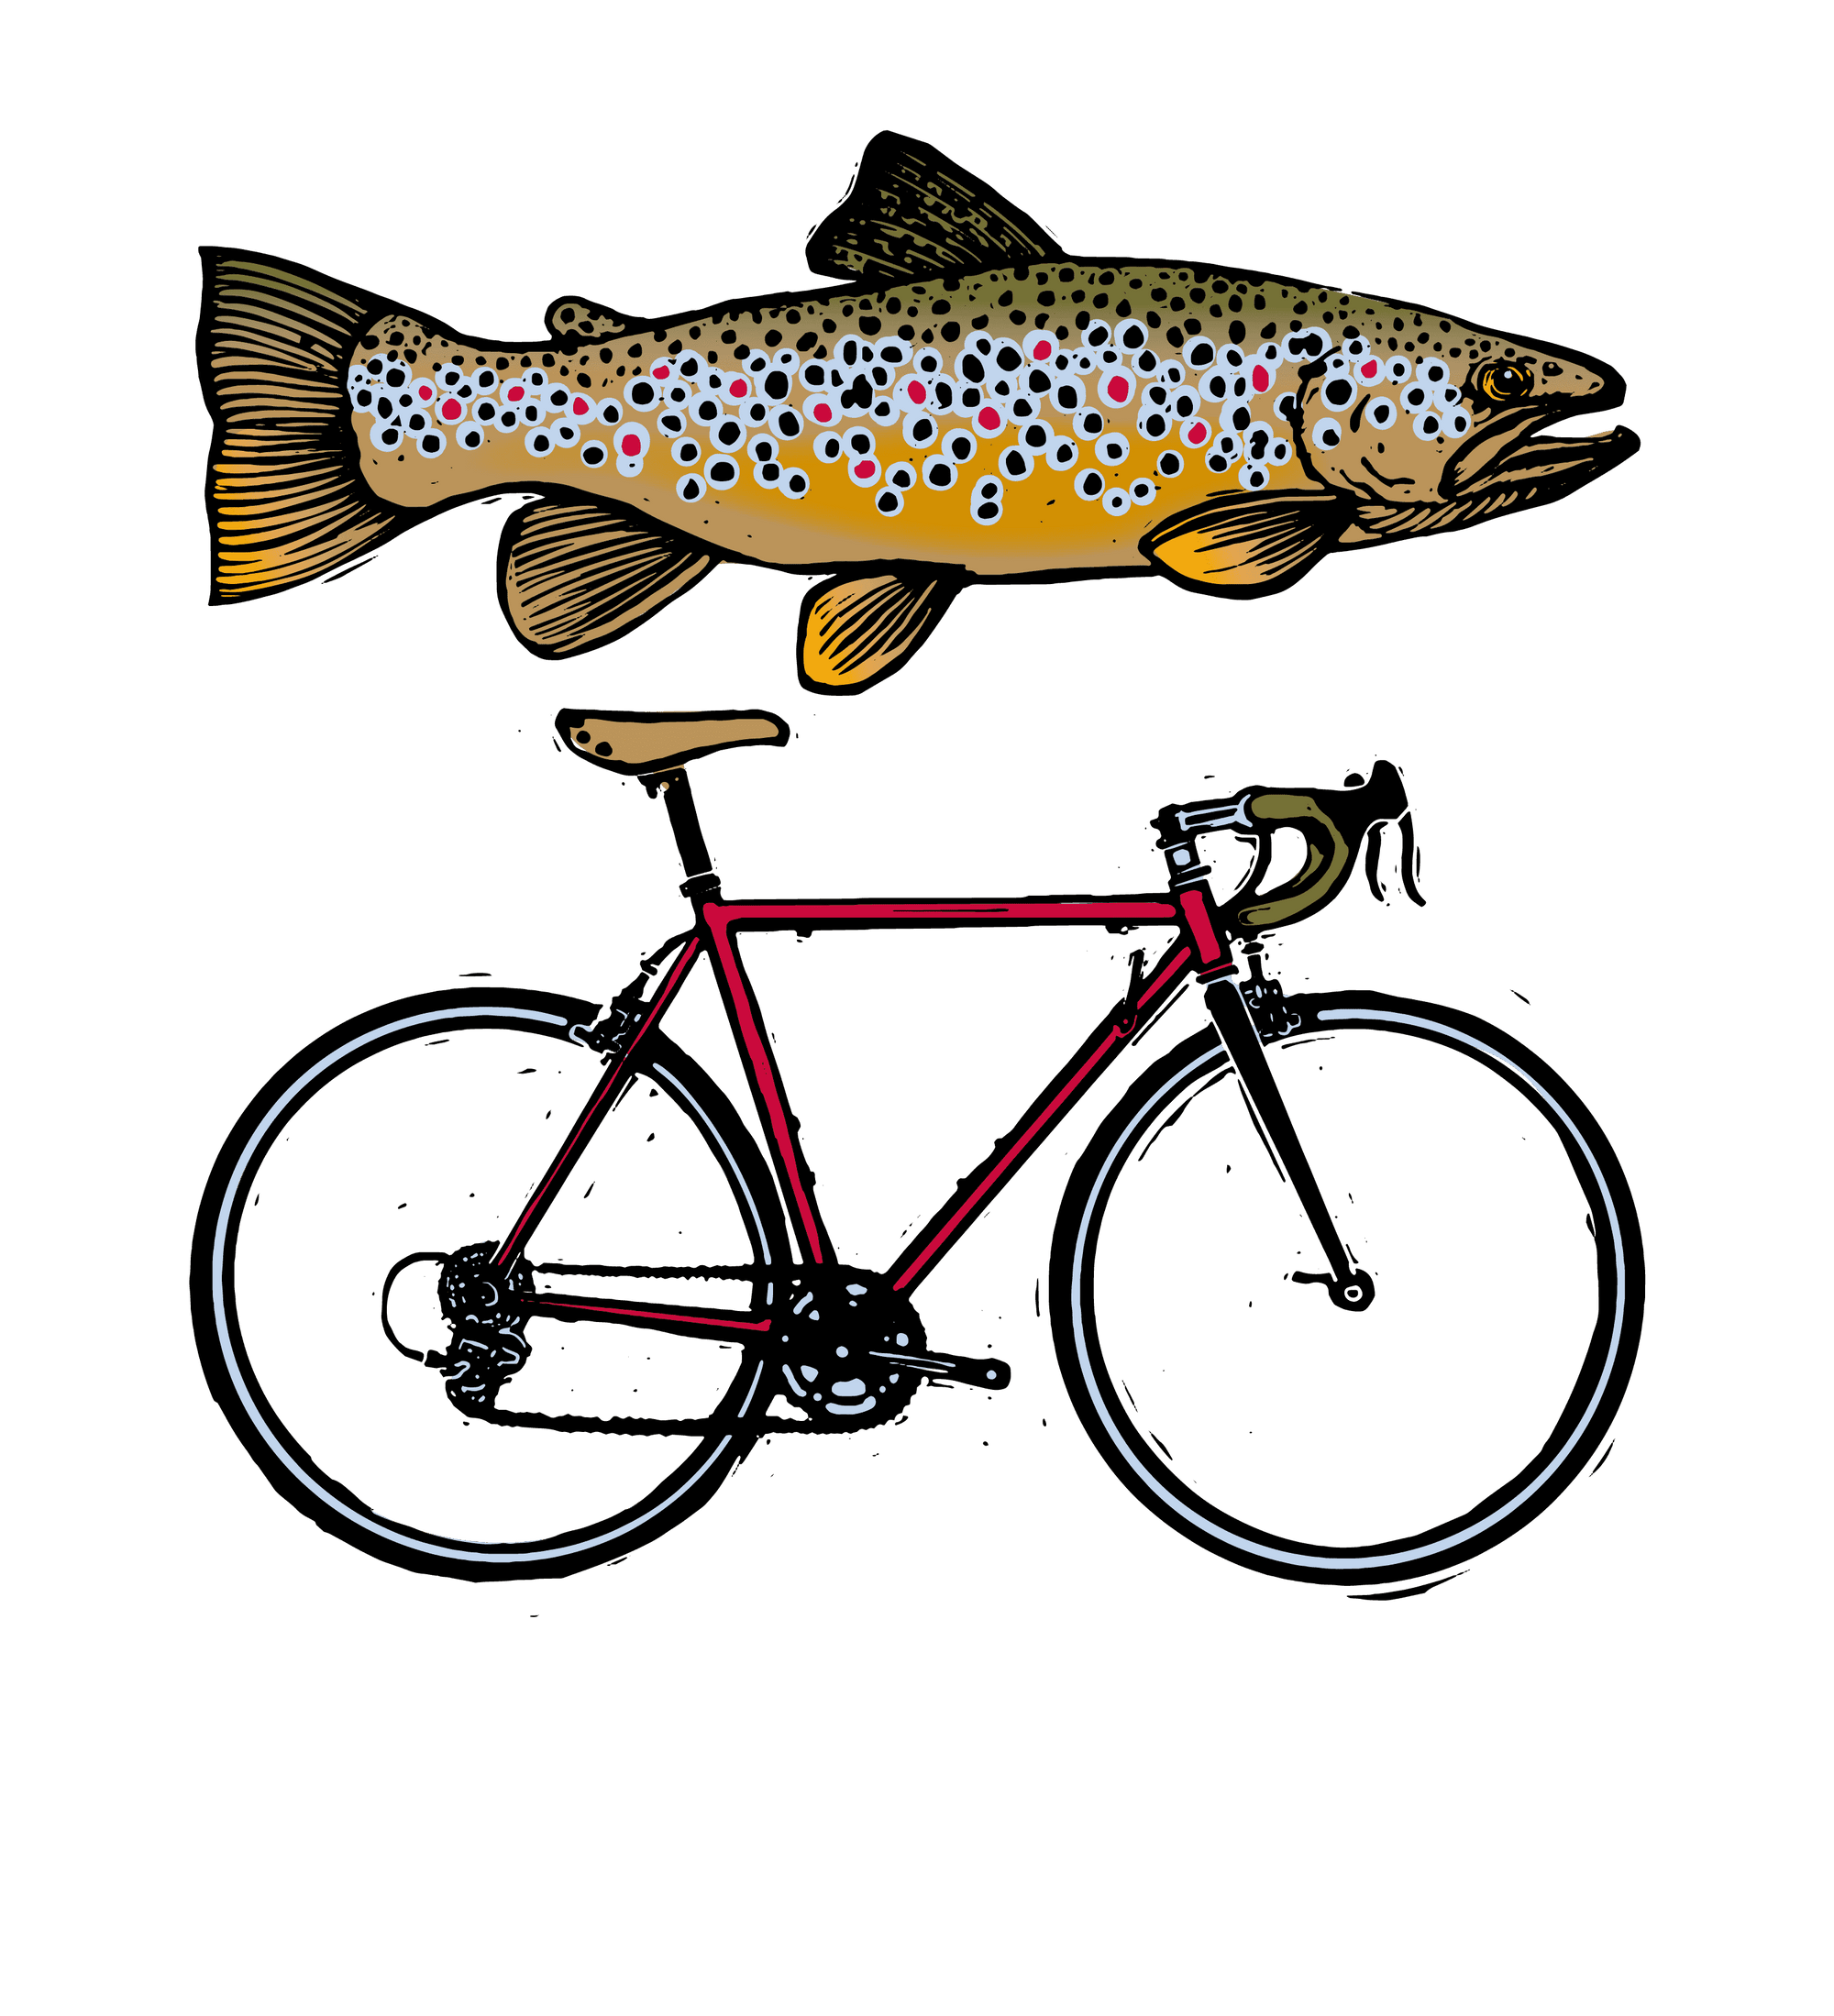 Women's T-shirt - Fish Bike